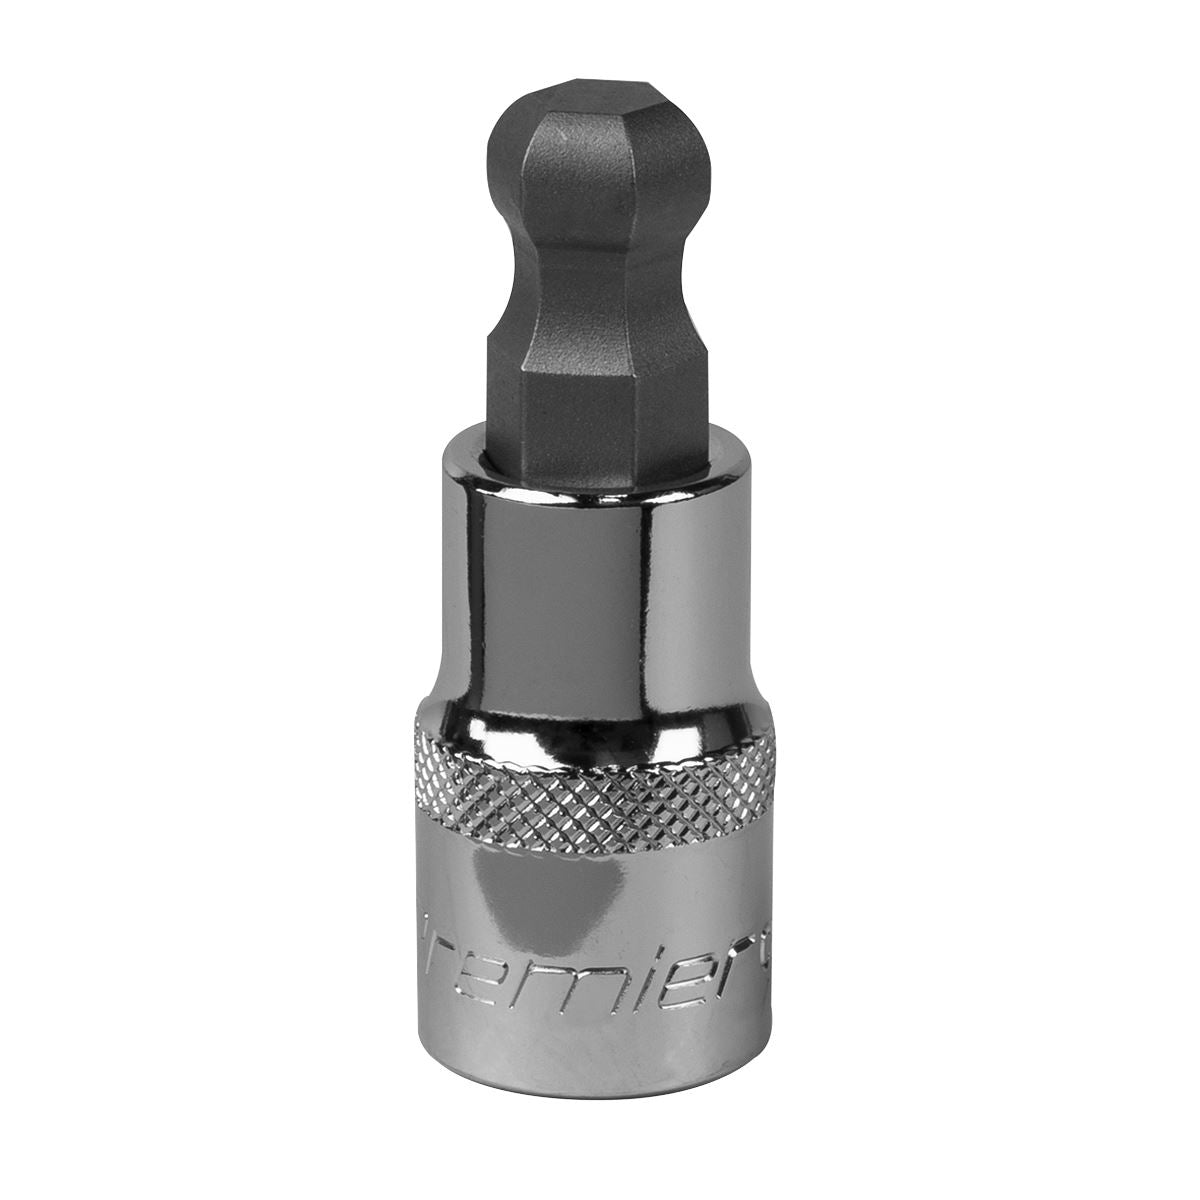 Sealey Premier Ball-End Hex Socket Bit 12mm 1/2"Sq Drive